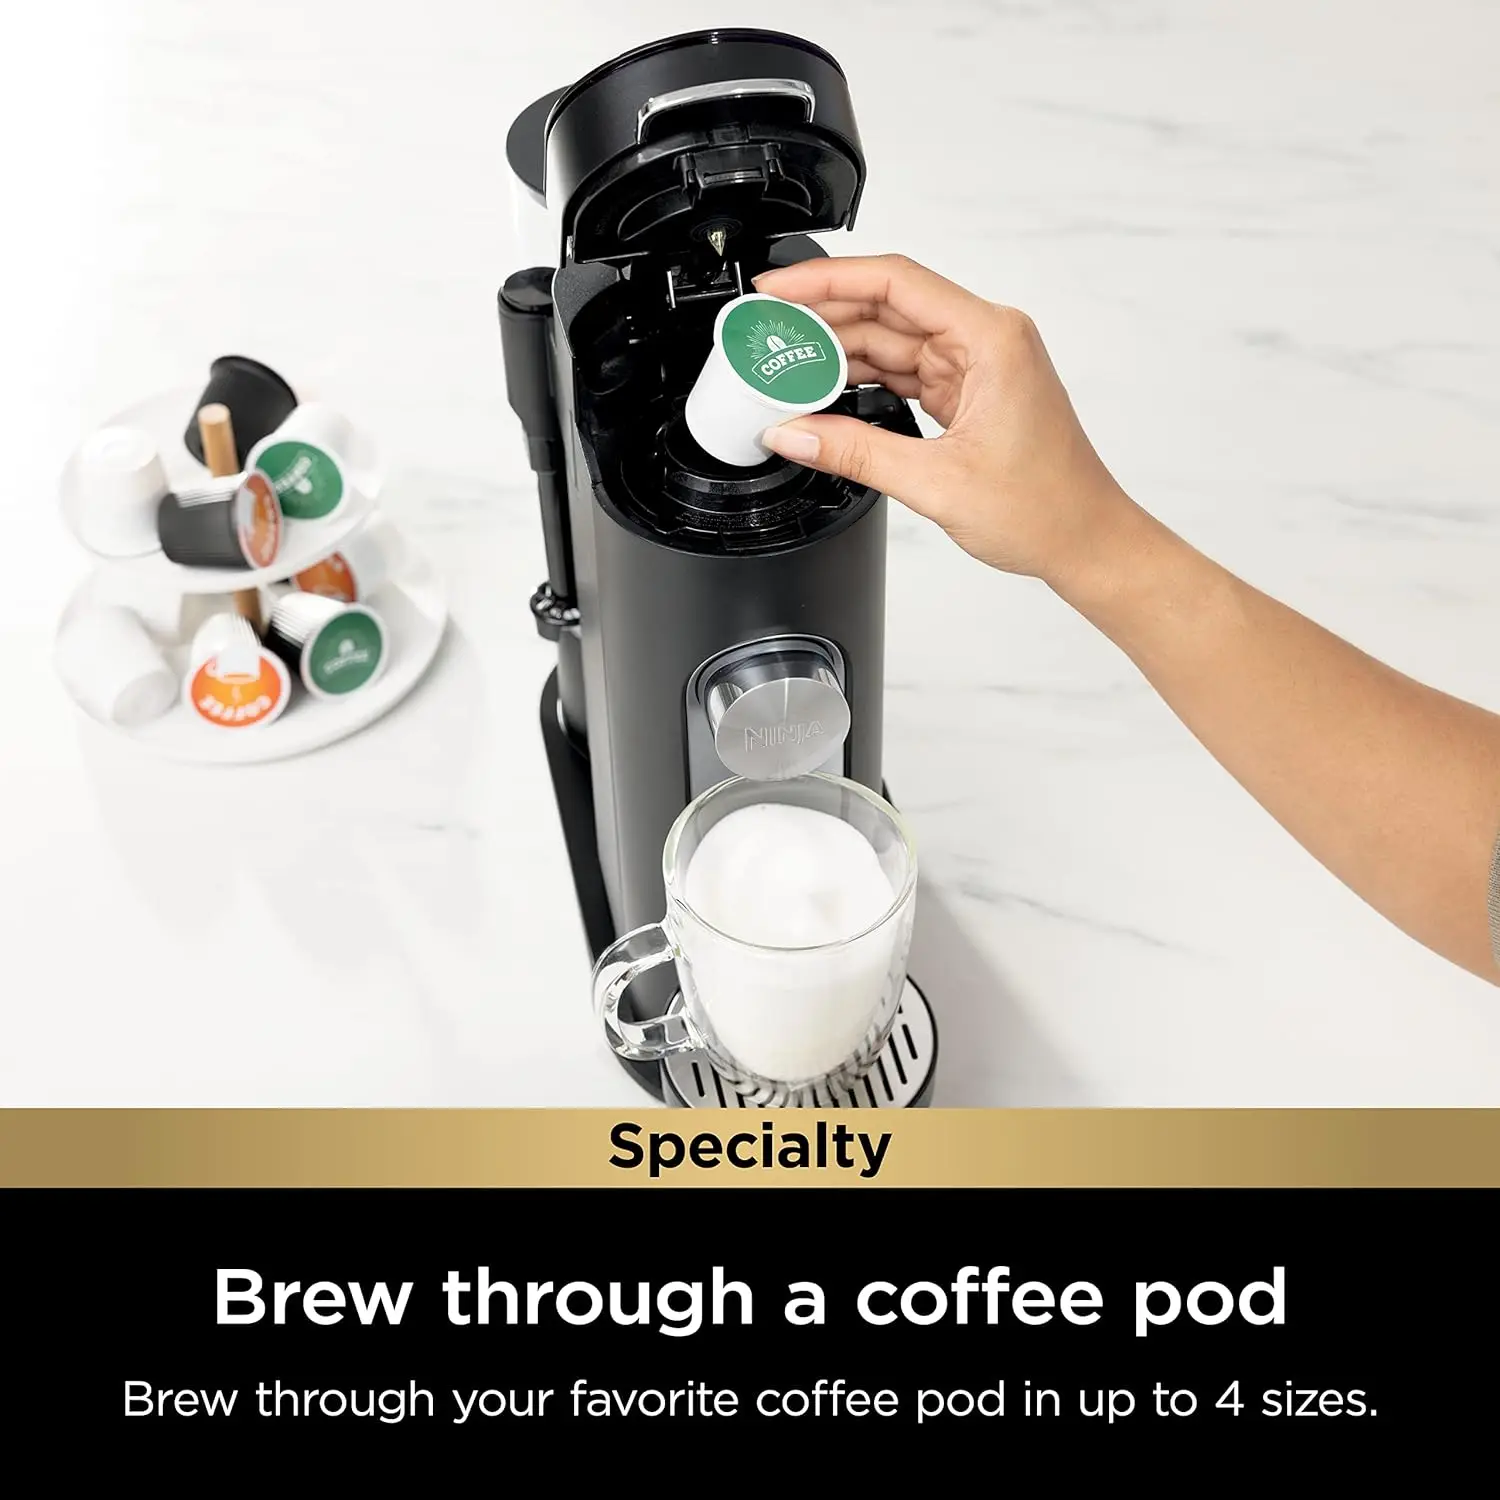 https://ae01.alicdn.com/kf/S8816721ce9e0493db803400d267fdf7dQ/Ninja-PB051-Pods-Grounds-Specialty-Single-Serve-Coffee-Maker-K-Cup-Pod-Compatible-Built-In-Milk.jpg